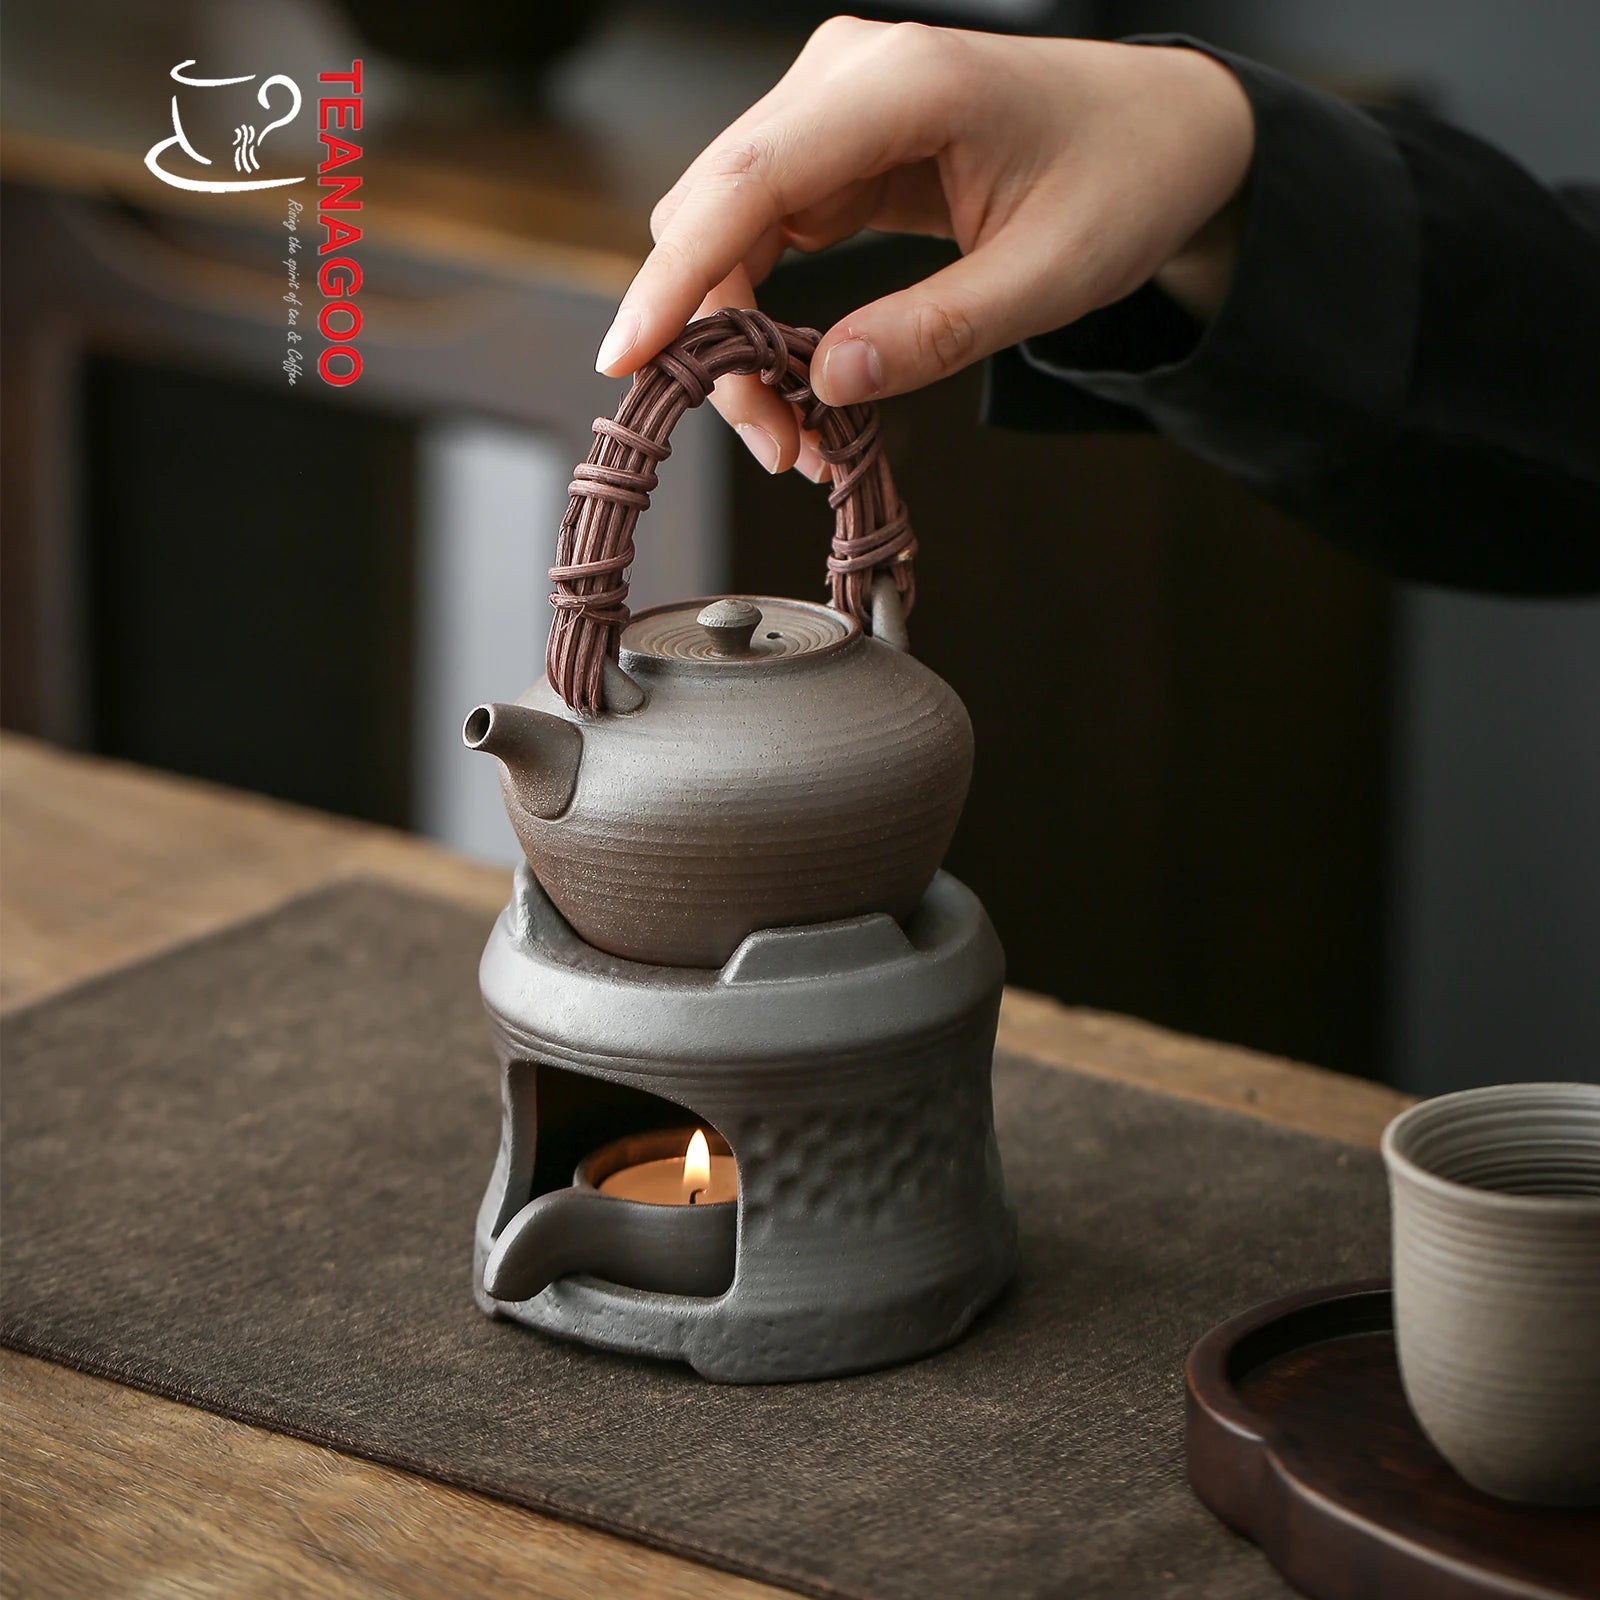 Pottery Clay Teapot Warmer